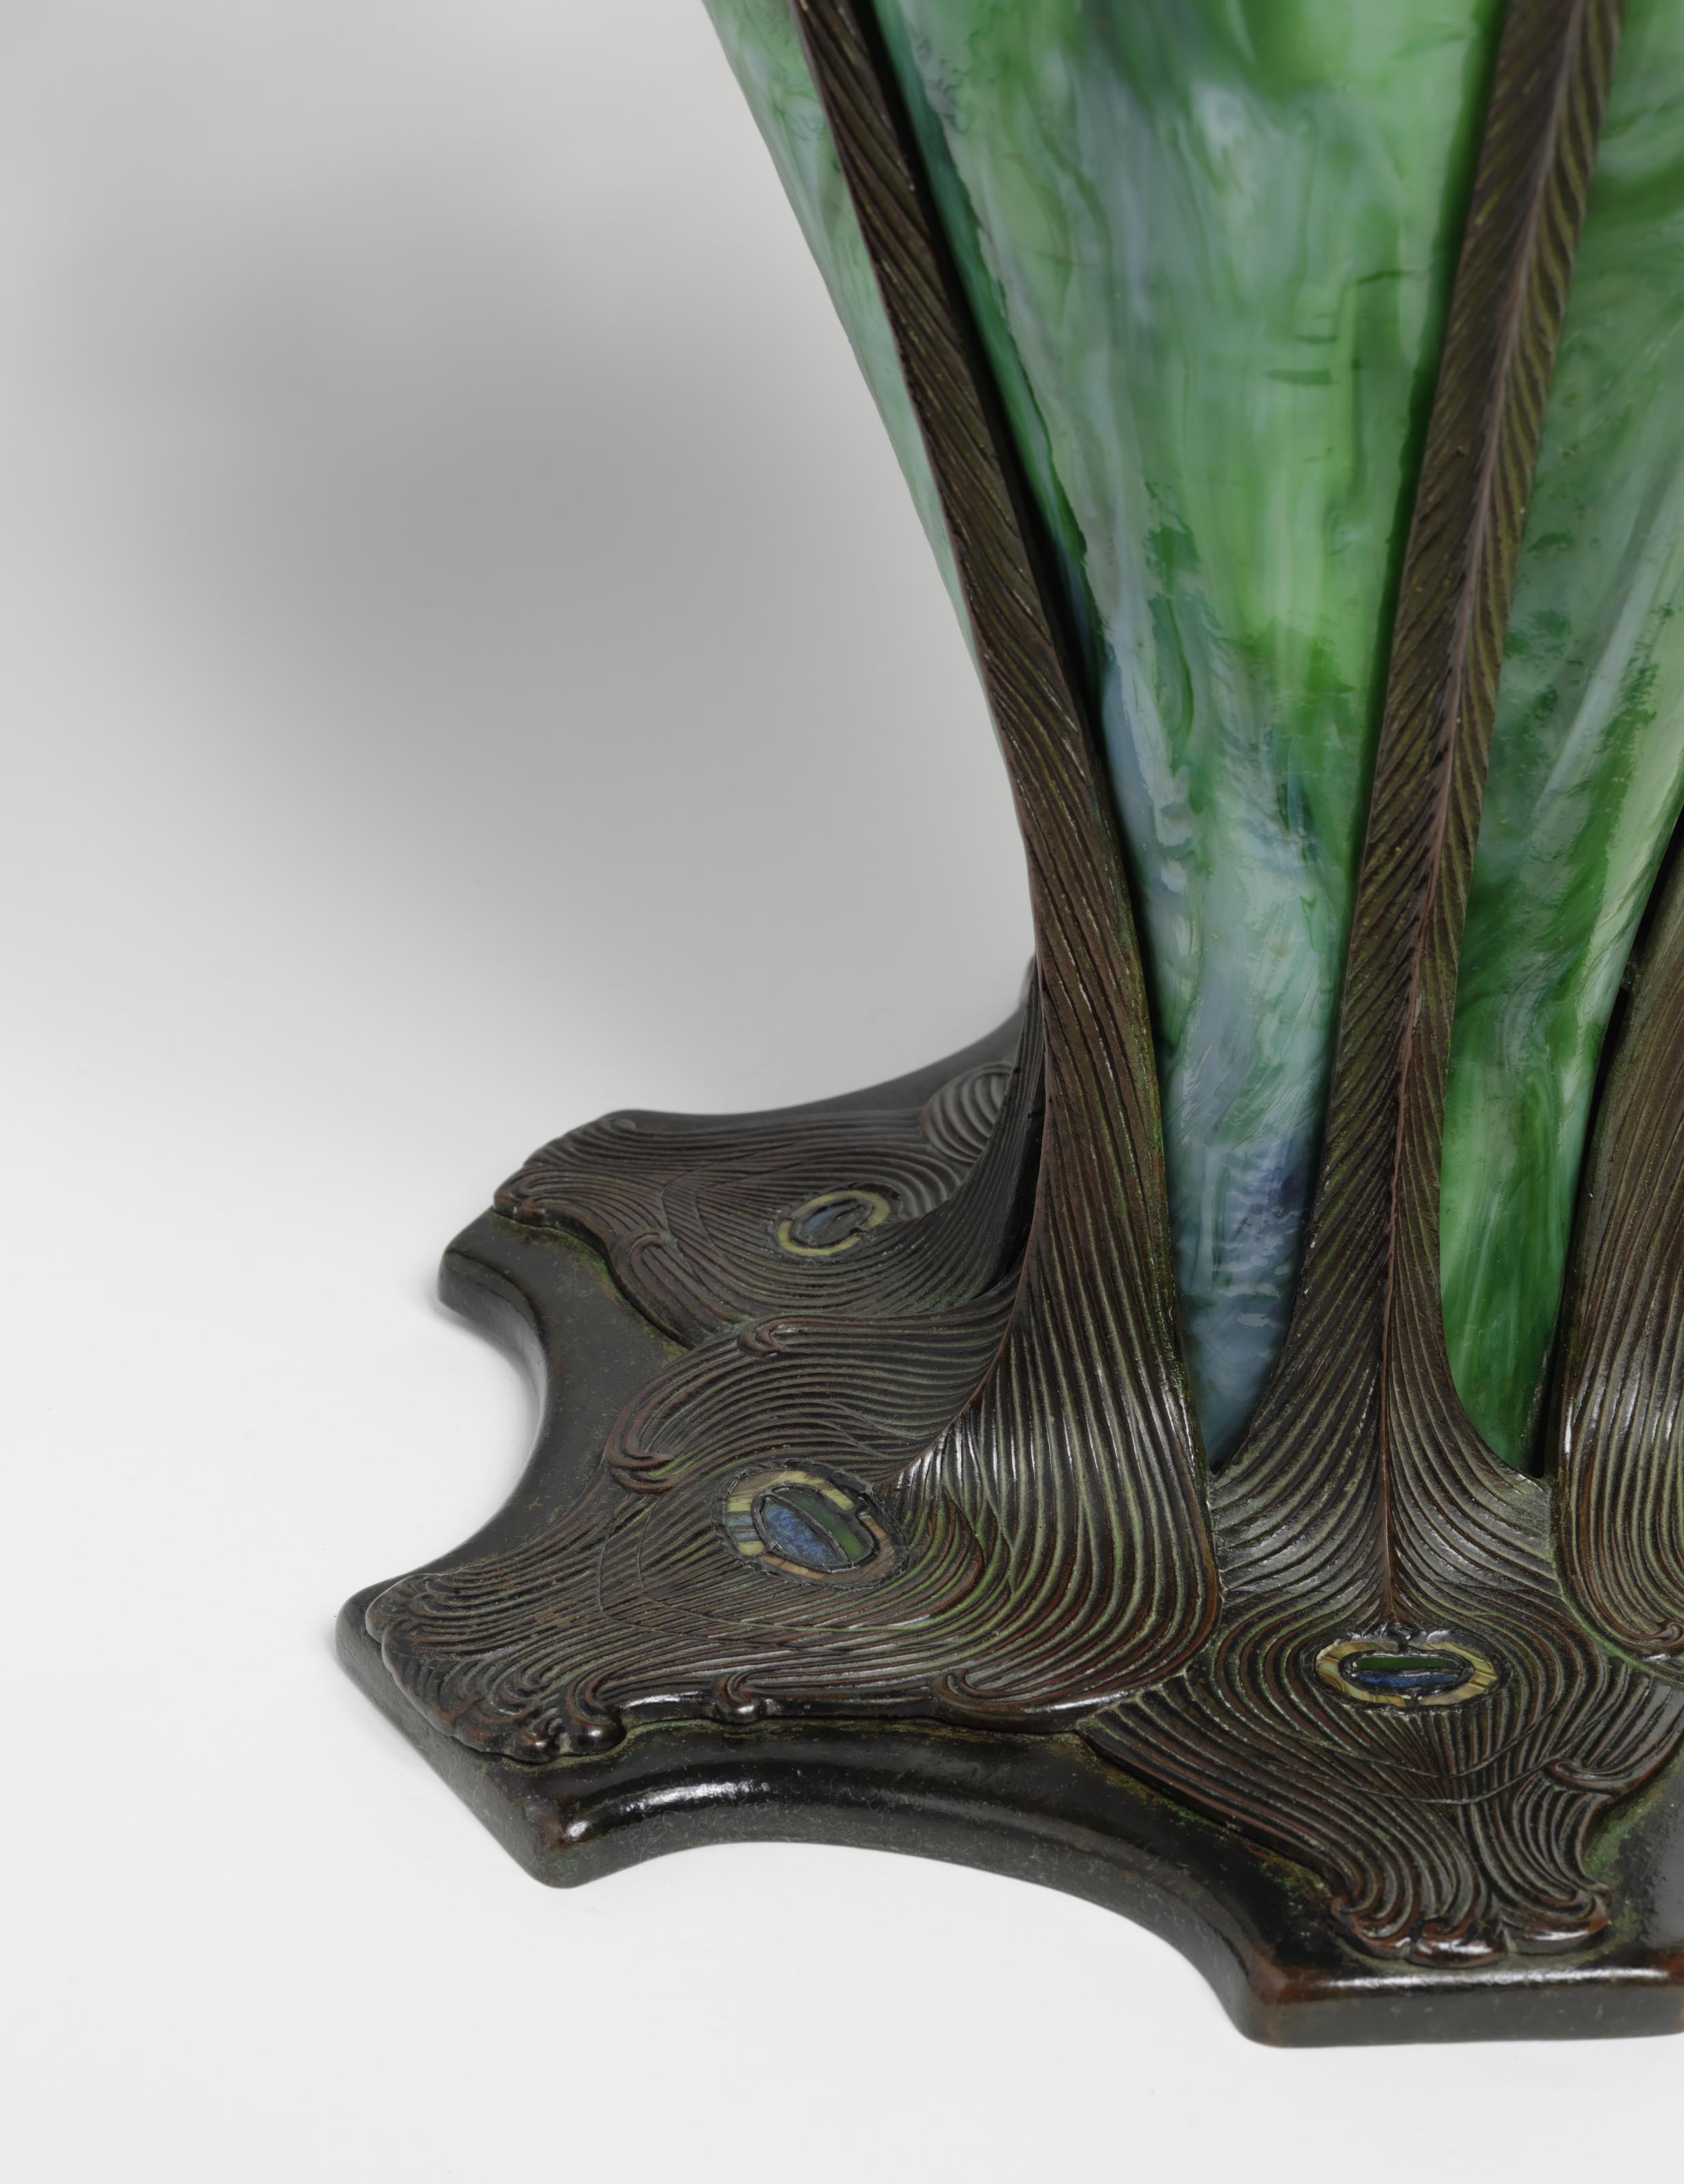 TIffany Studios Peacock Vase detail